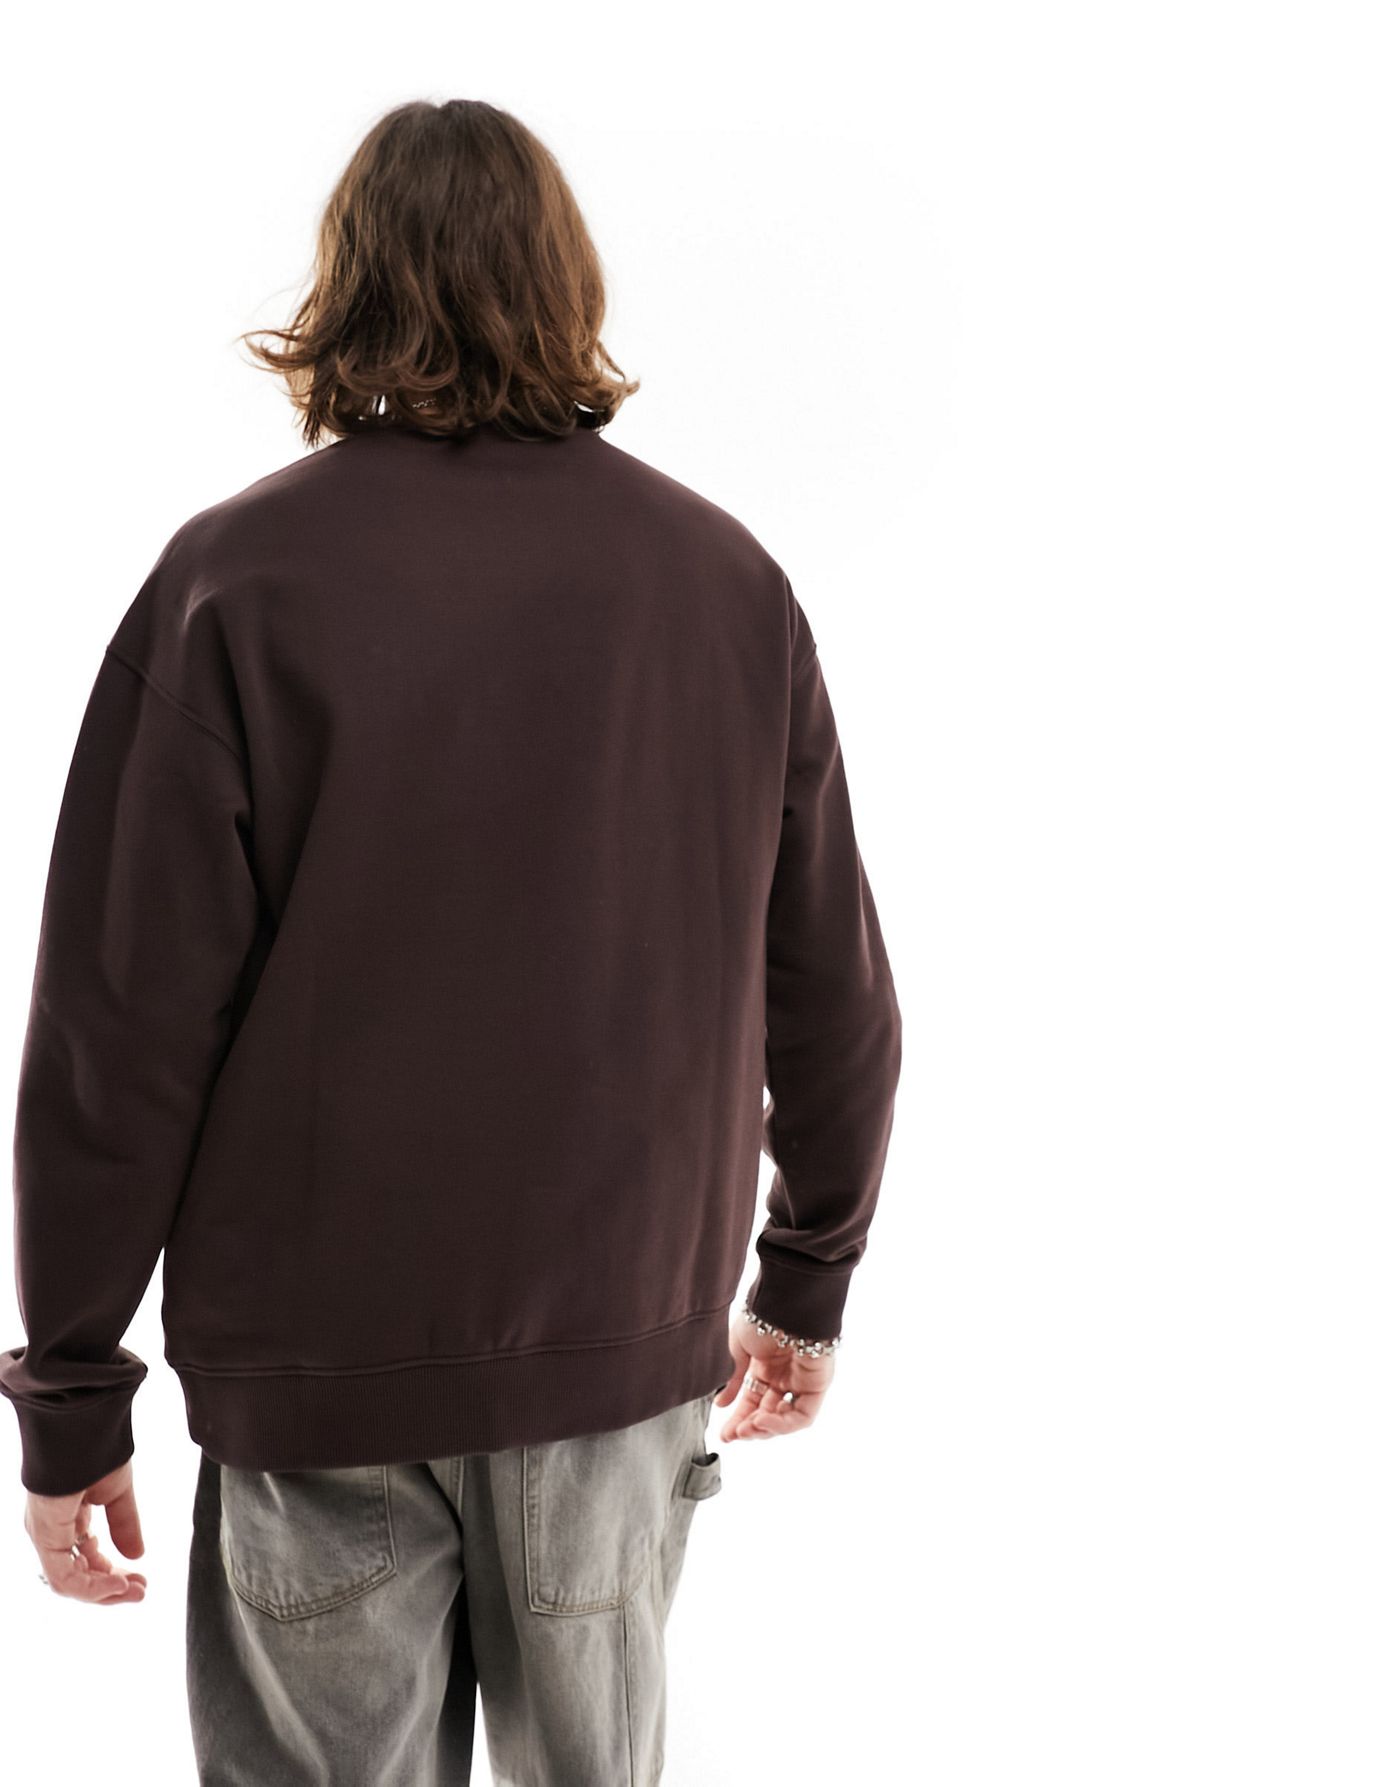 Lee chest arc logo oversized sweatshirt in brown